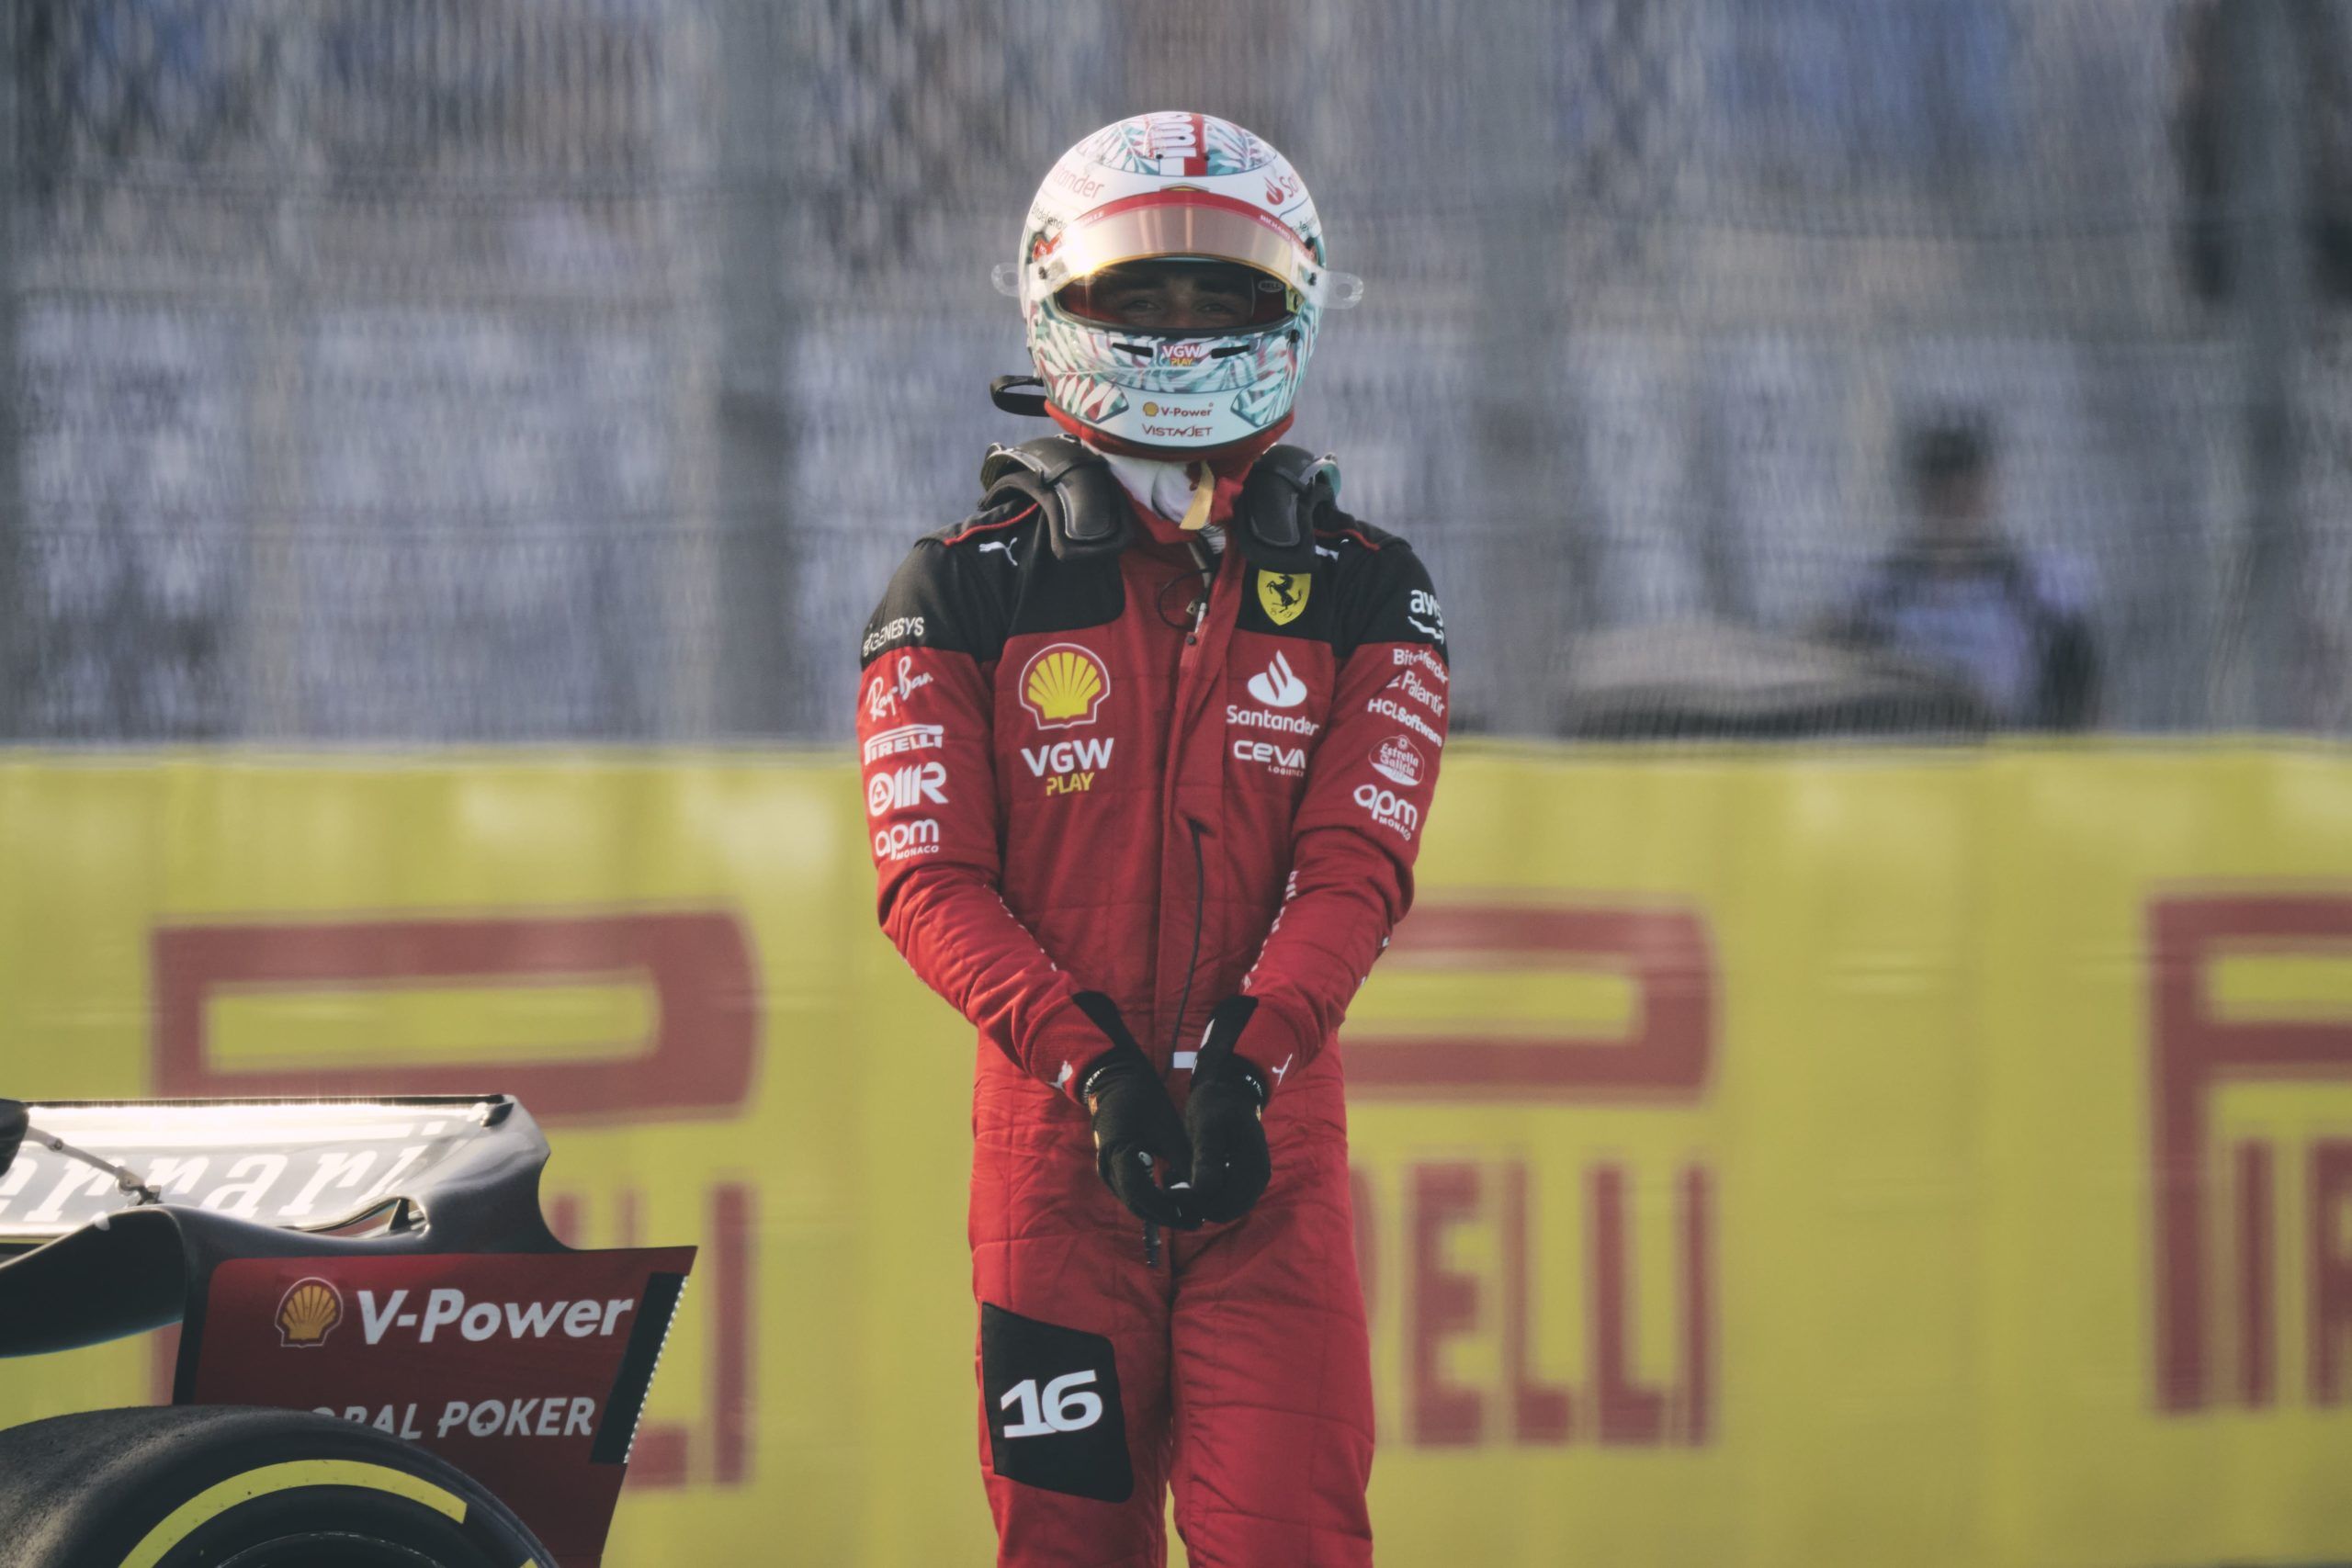 Ferrari, Jock Clear, Charles Leclerc